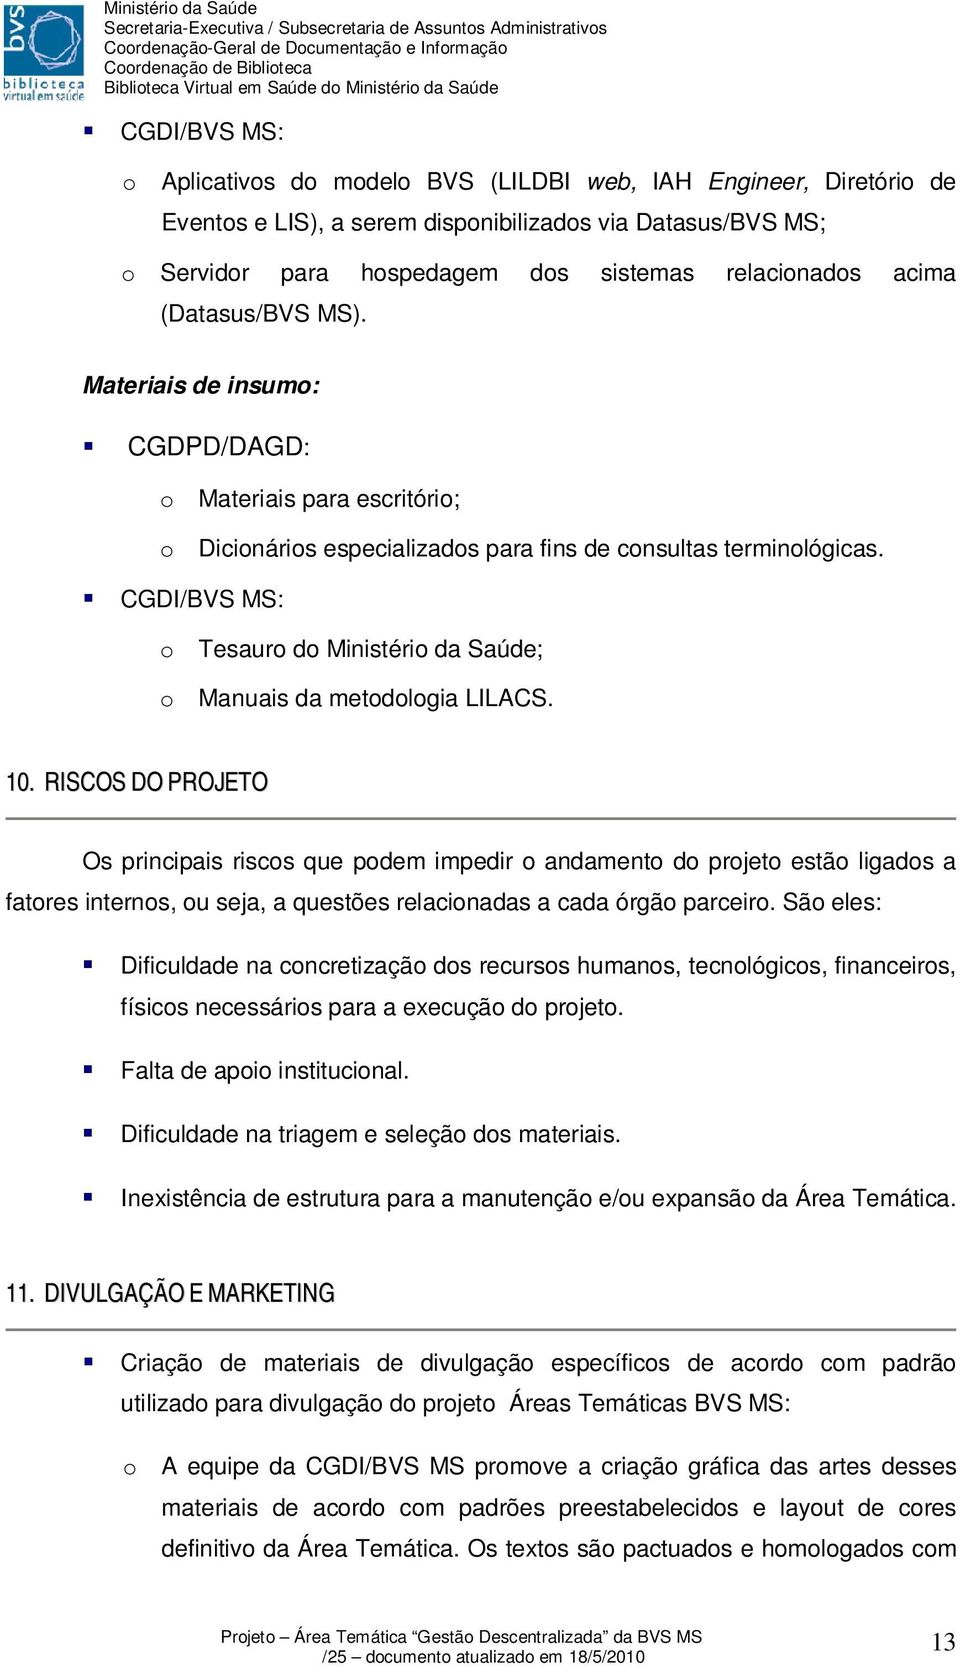 CGDI/BVS MS: o Tesauro do Ministério da Saúde; o Manuais da metodologia LILACS. 10.